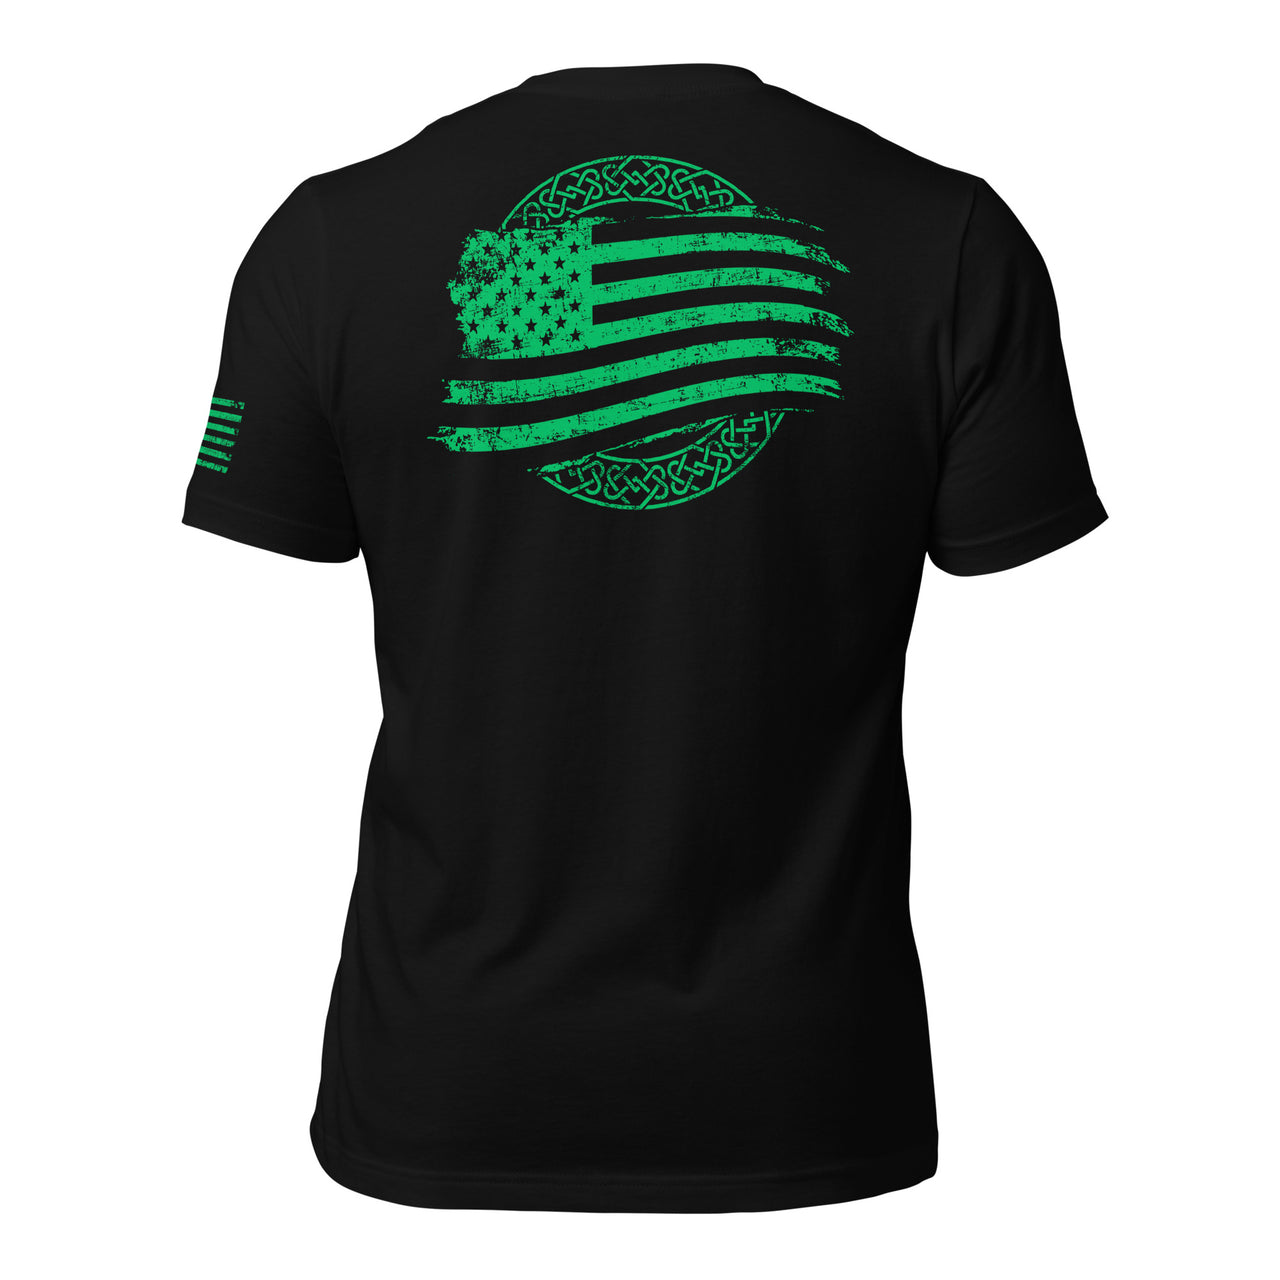 Irish American Flag T-Shirt in black back view